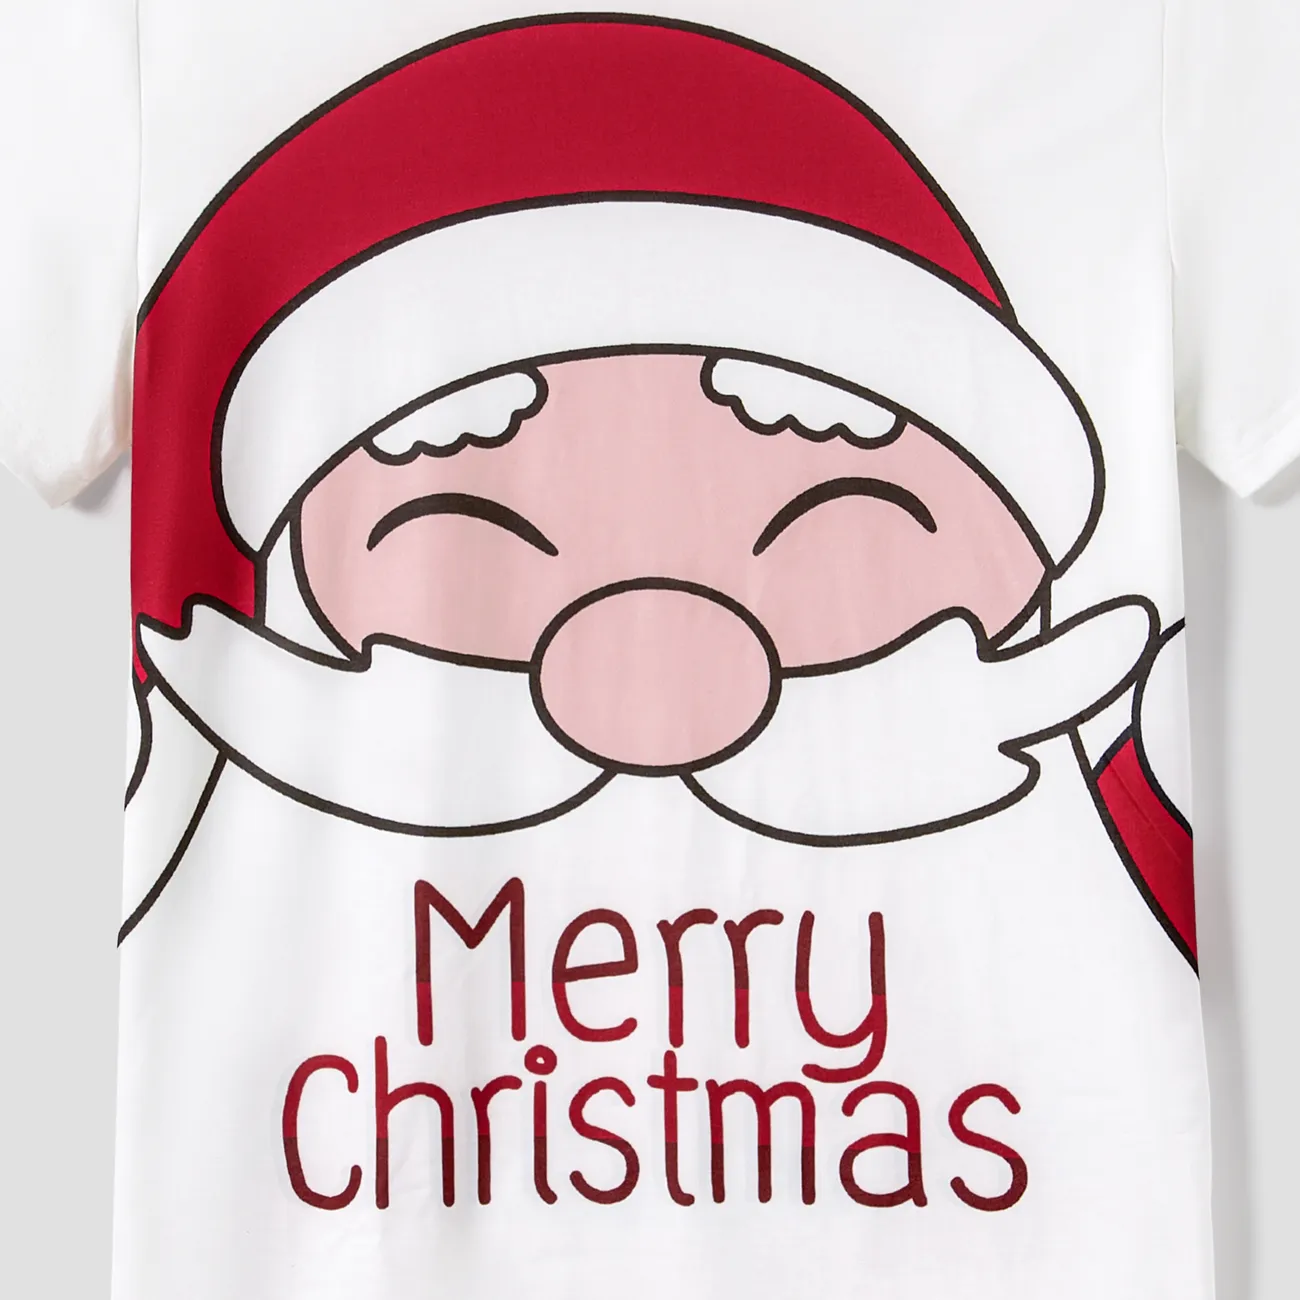 Christmas Santa and Snowman Print Family Matching Short-sleeve Tops and Shorts Pajamas Sets (Flame Resistant) White big image 1